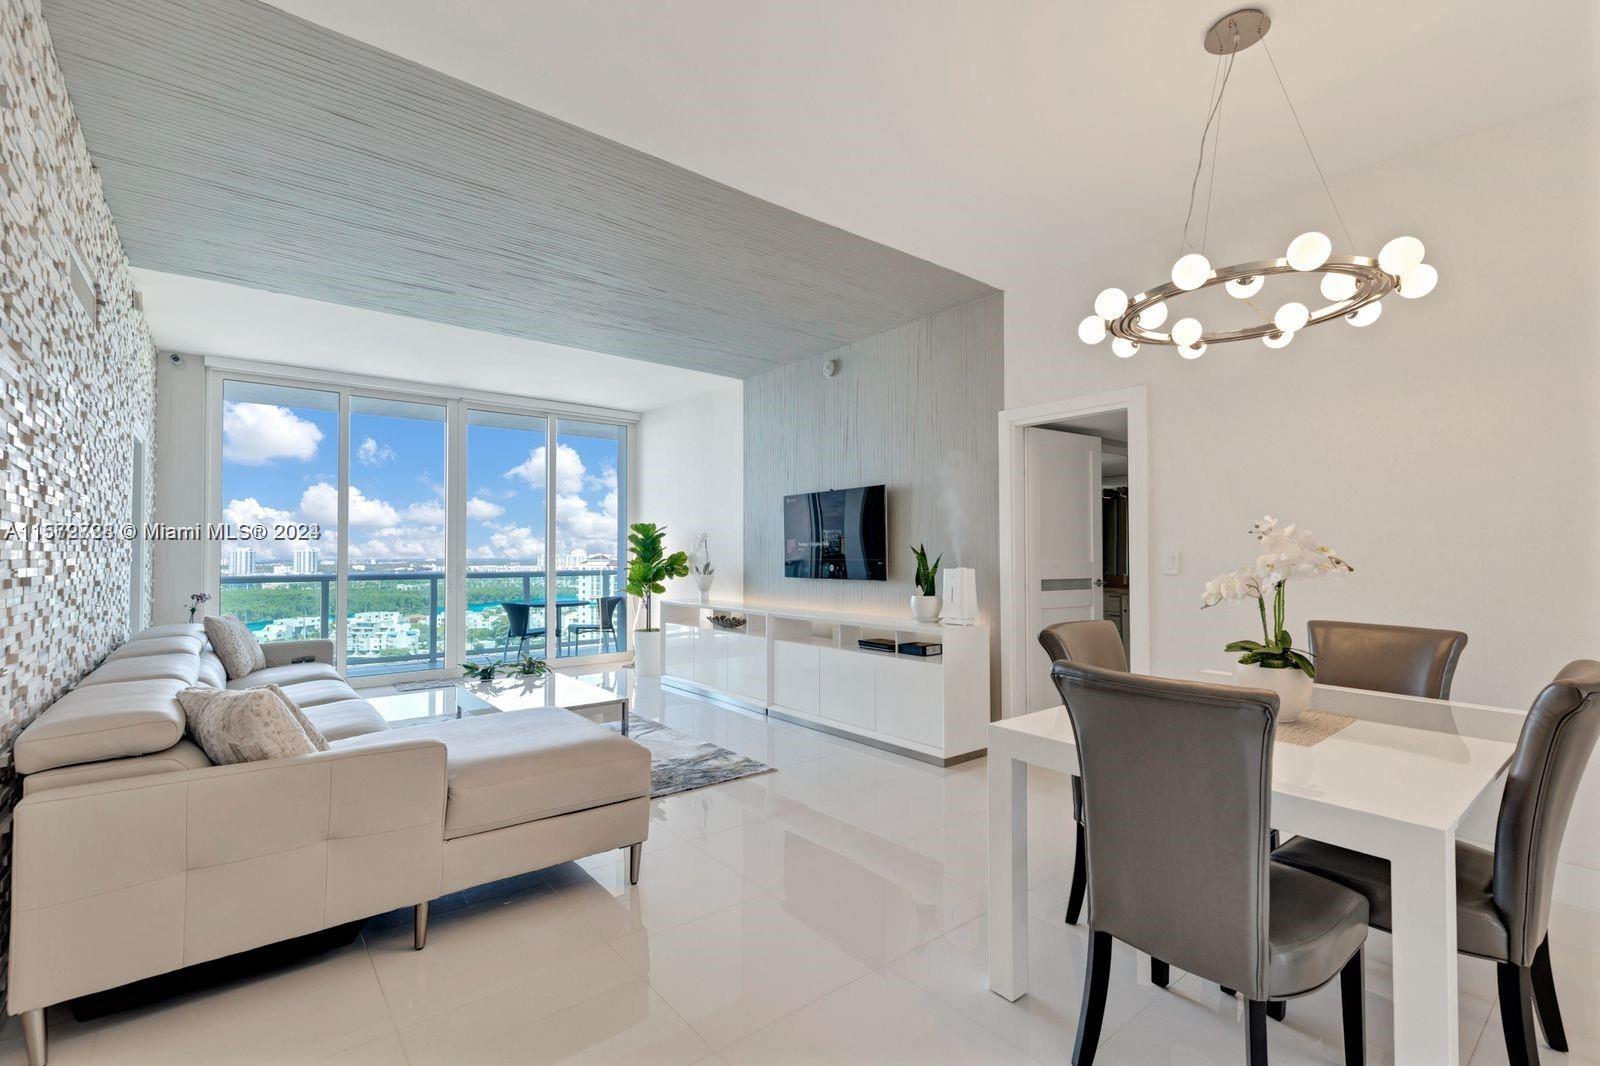 Rental Property at 100 Bayview Dr Ph01, Sunny Isles Beach, Miami-Dade County, Florida - Bedrooms: 2 
Bathrooms: 2  - $4,300 MO.